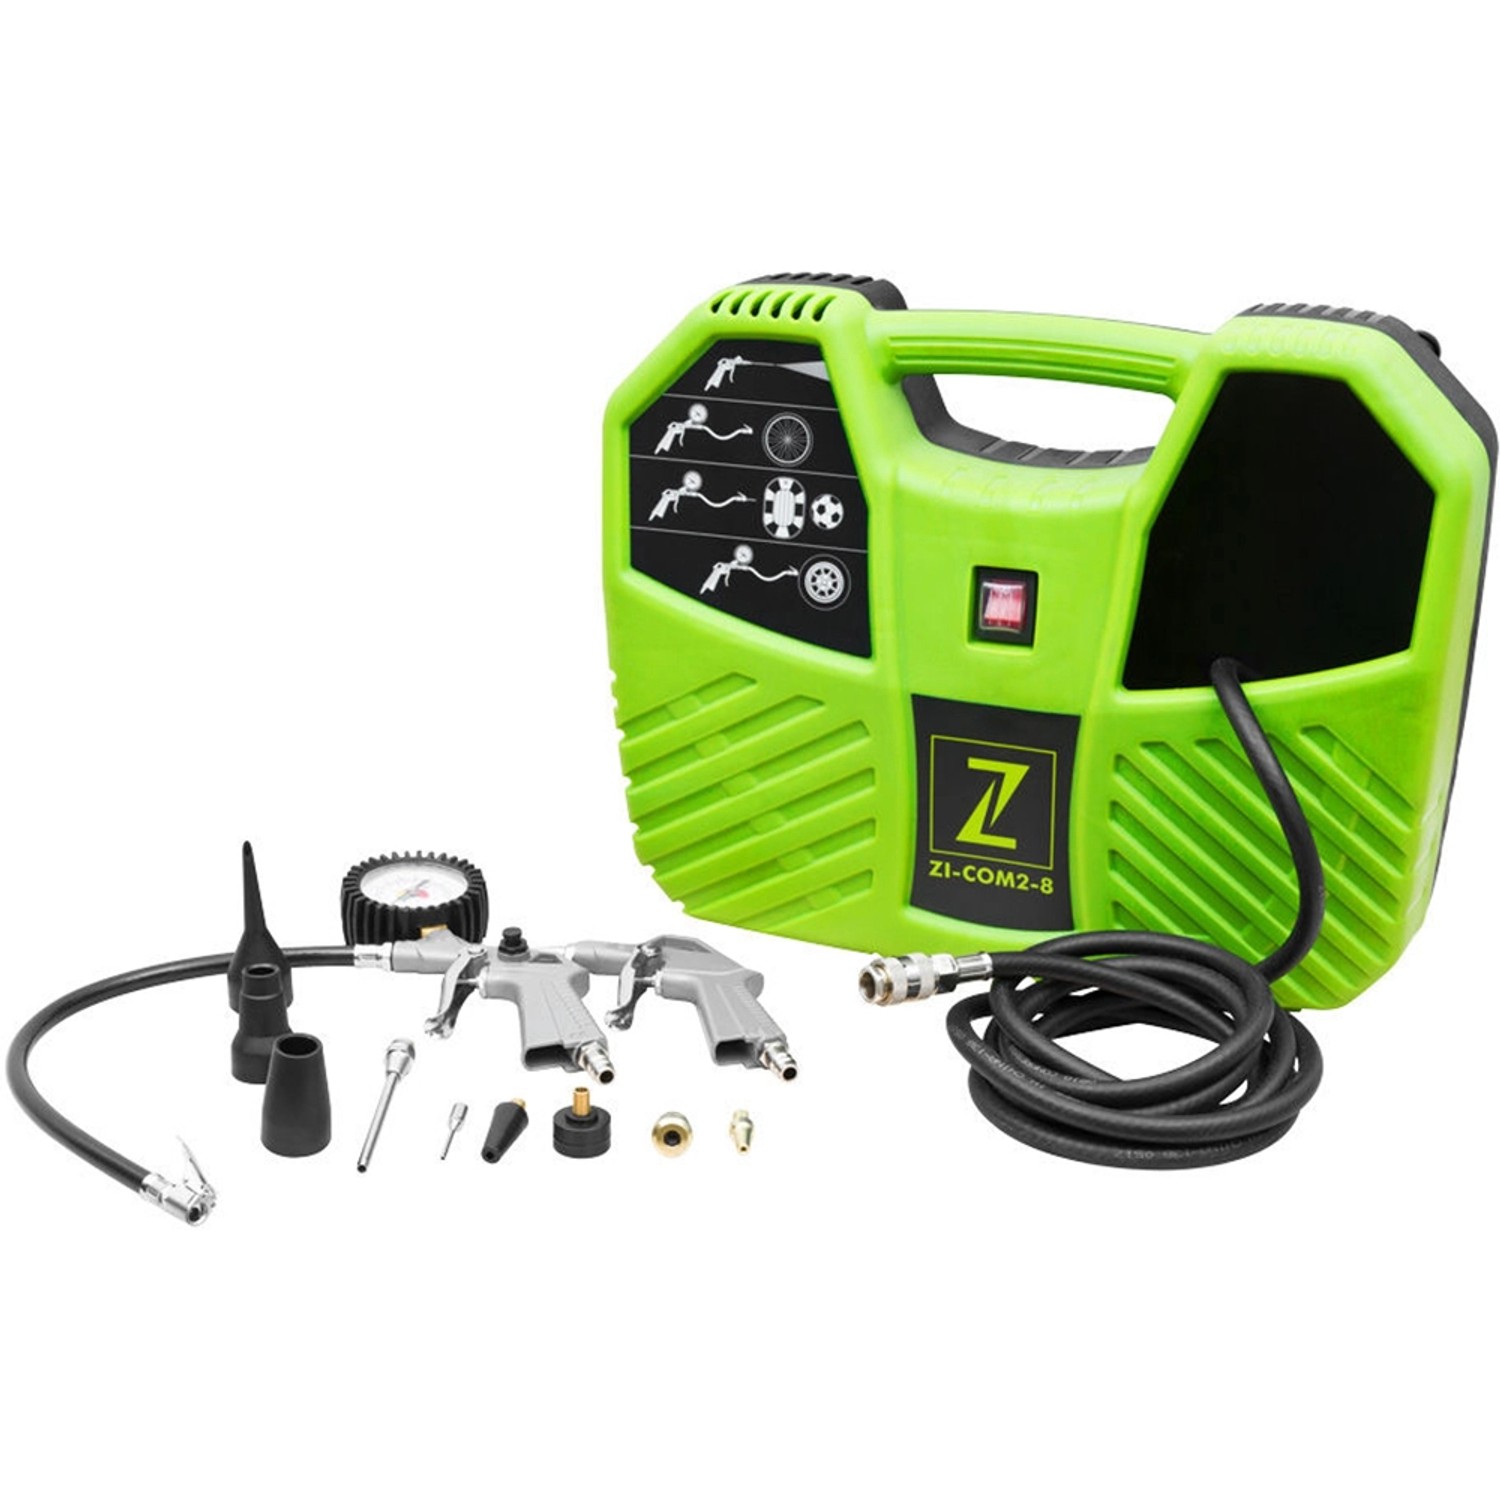 Zipper ZI-COM2-8 Kompressor von Zipper